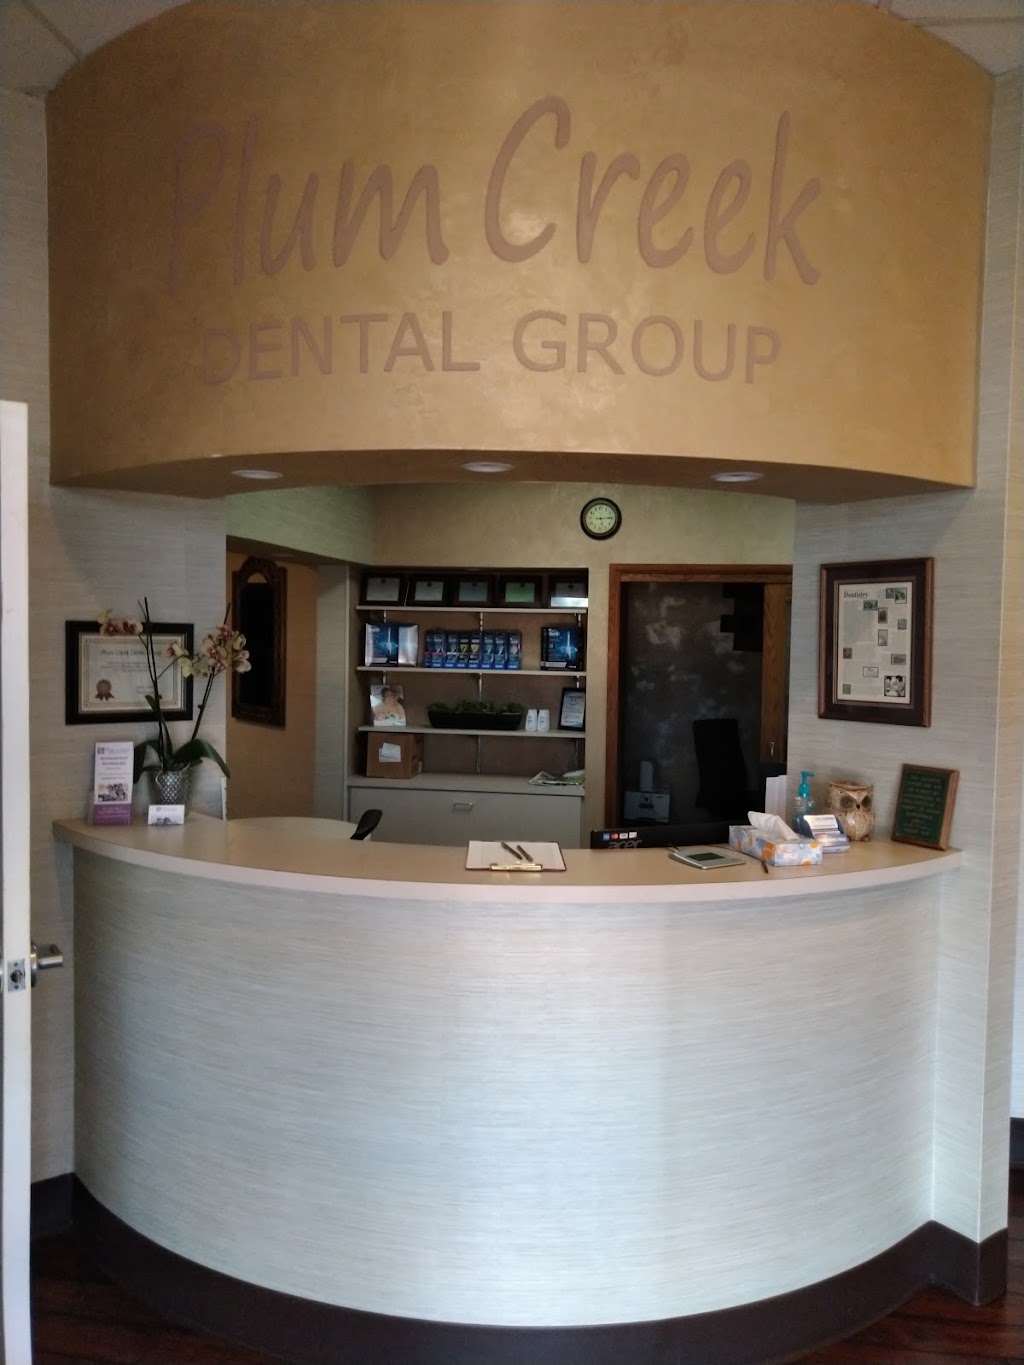 Plum Creek Dental Group | 1711 S Colorado St APT D, Lockhart, TX 78644, USA | Phone: (512) 213-4663